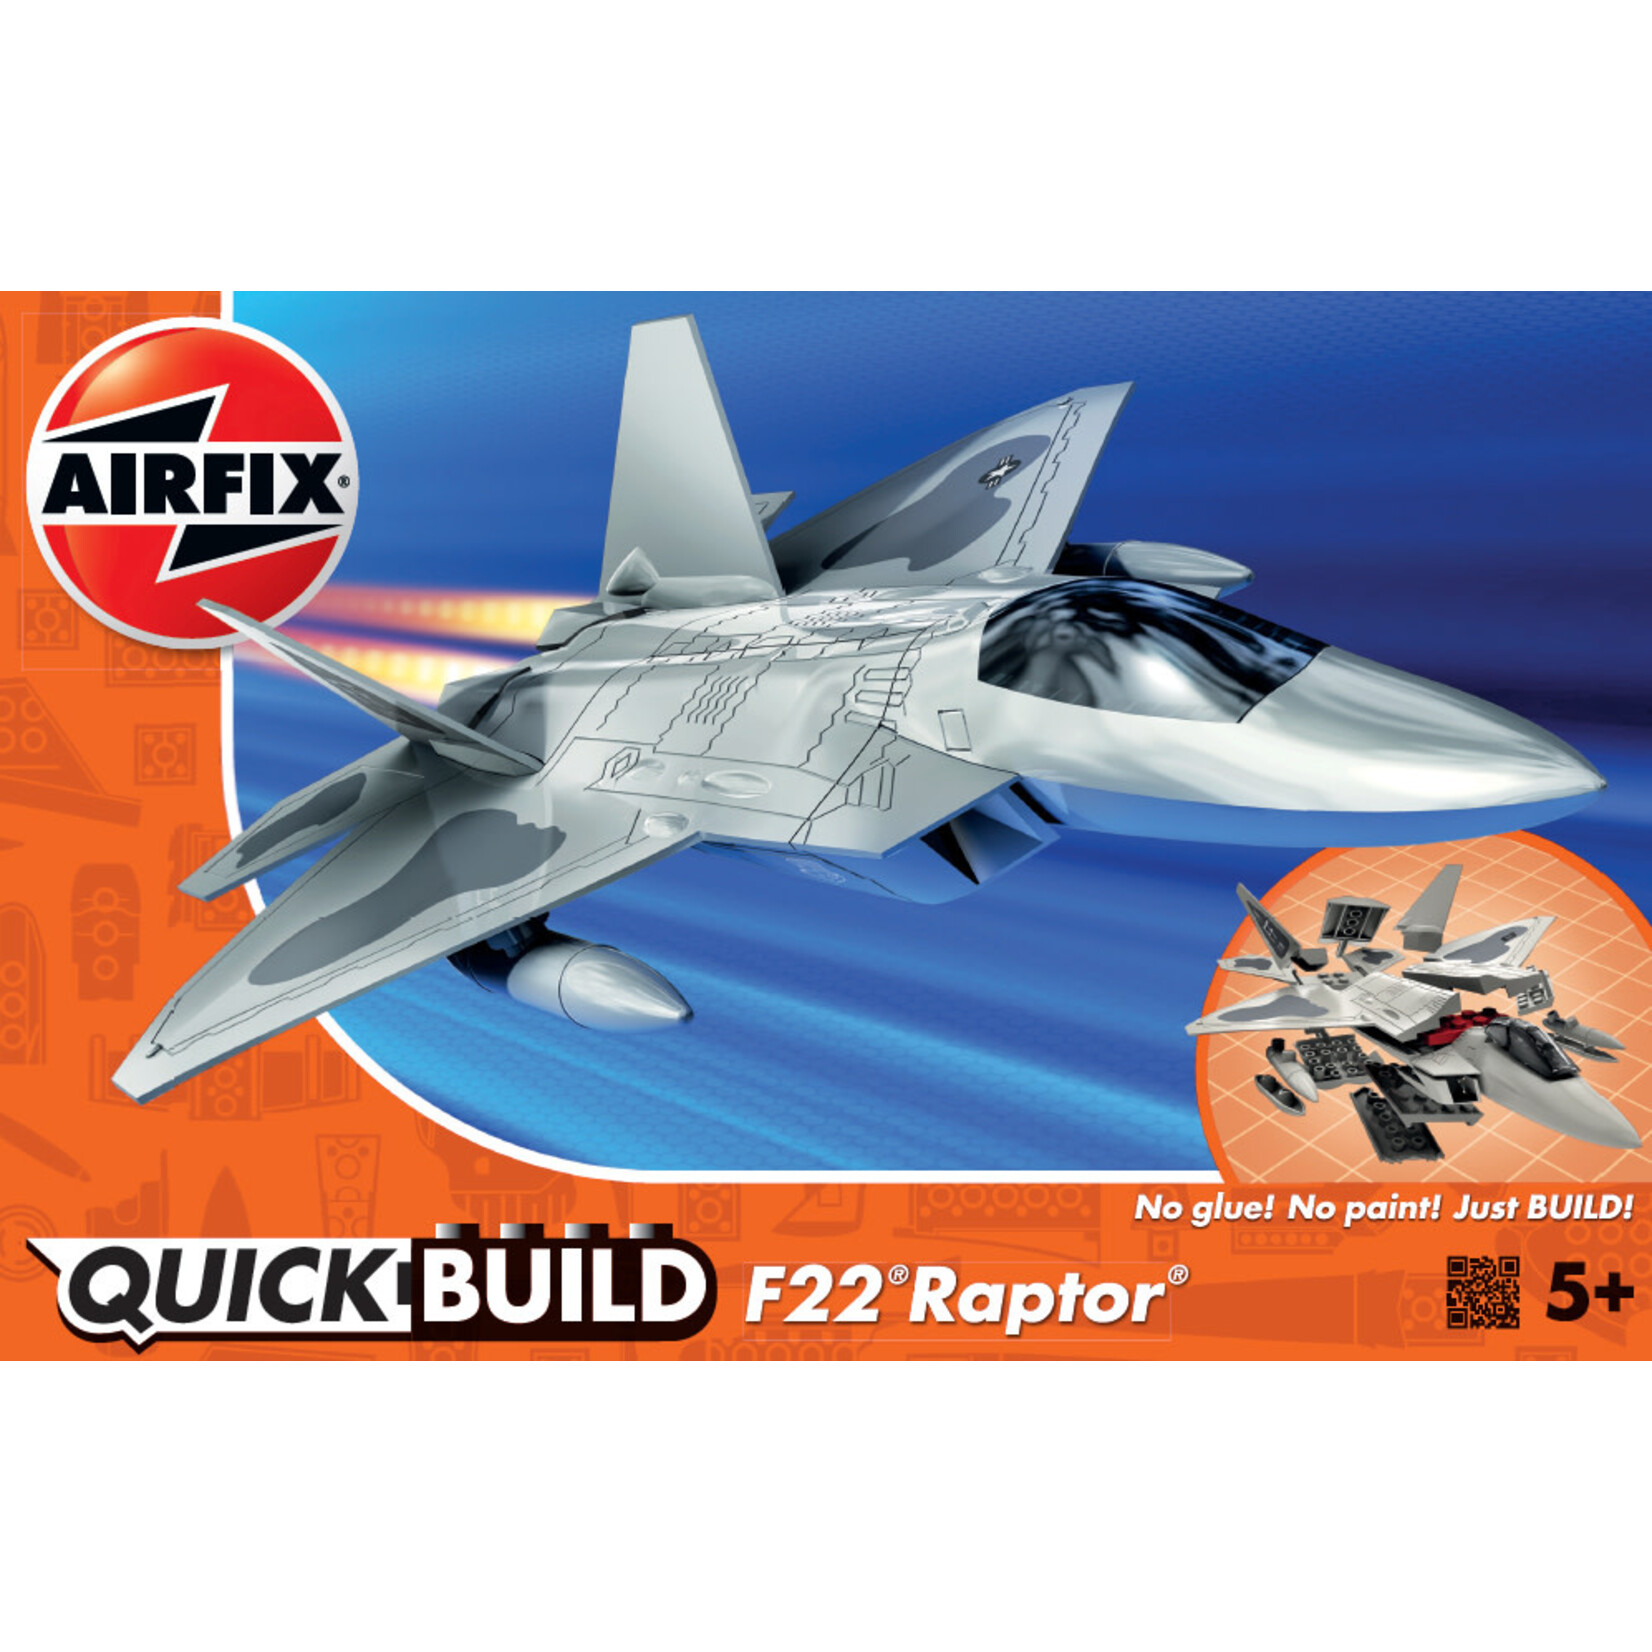 Airfix AIRJ6005 F22 Raptor Quick Build